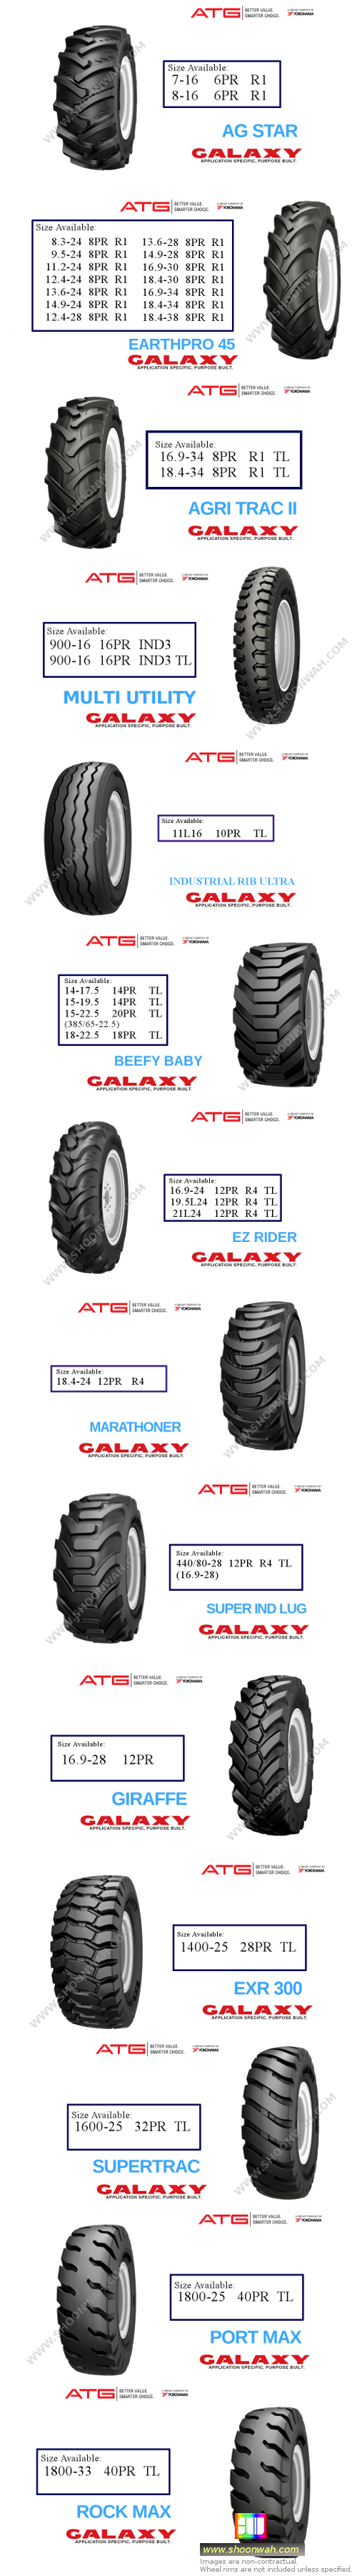 ATG Galaxy Tyre